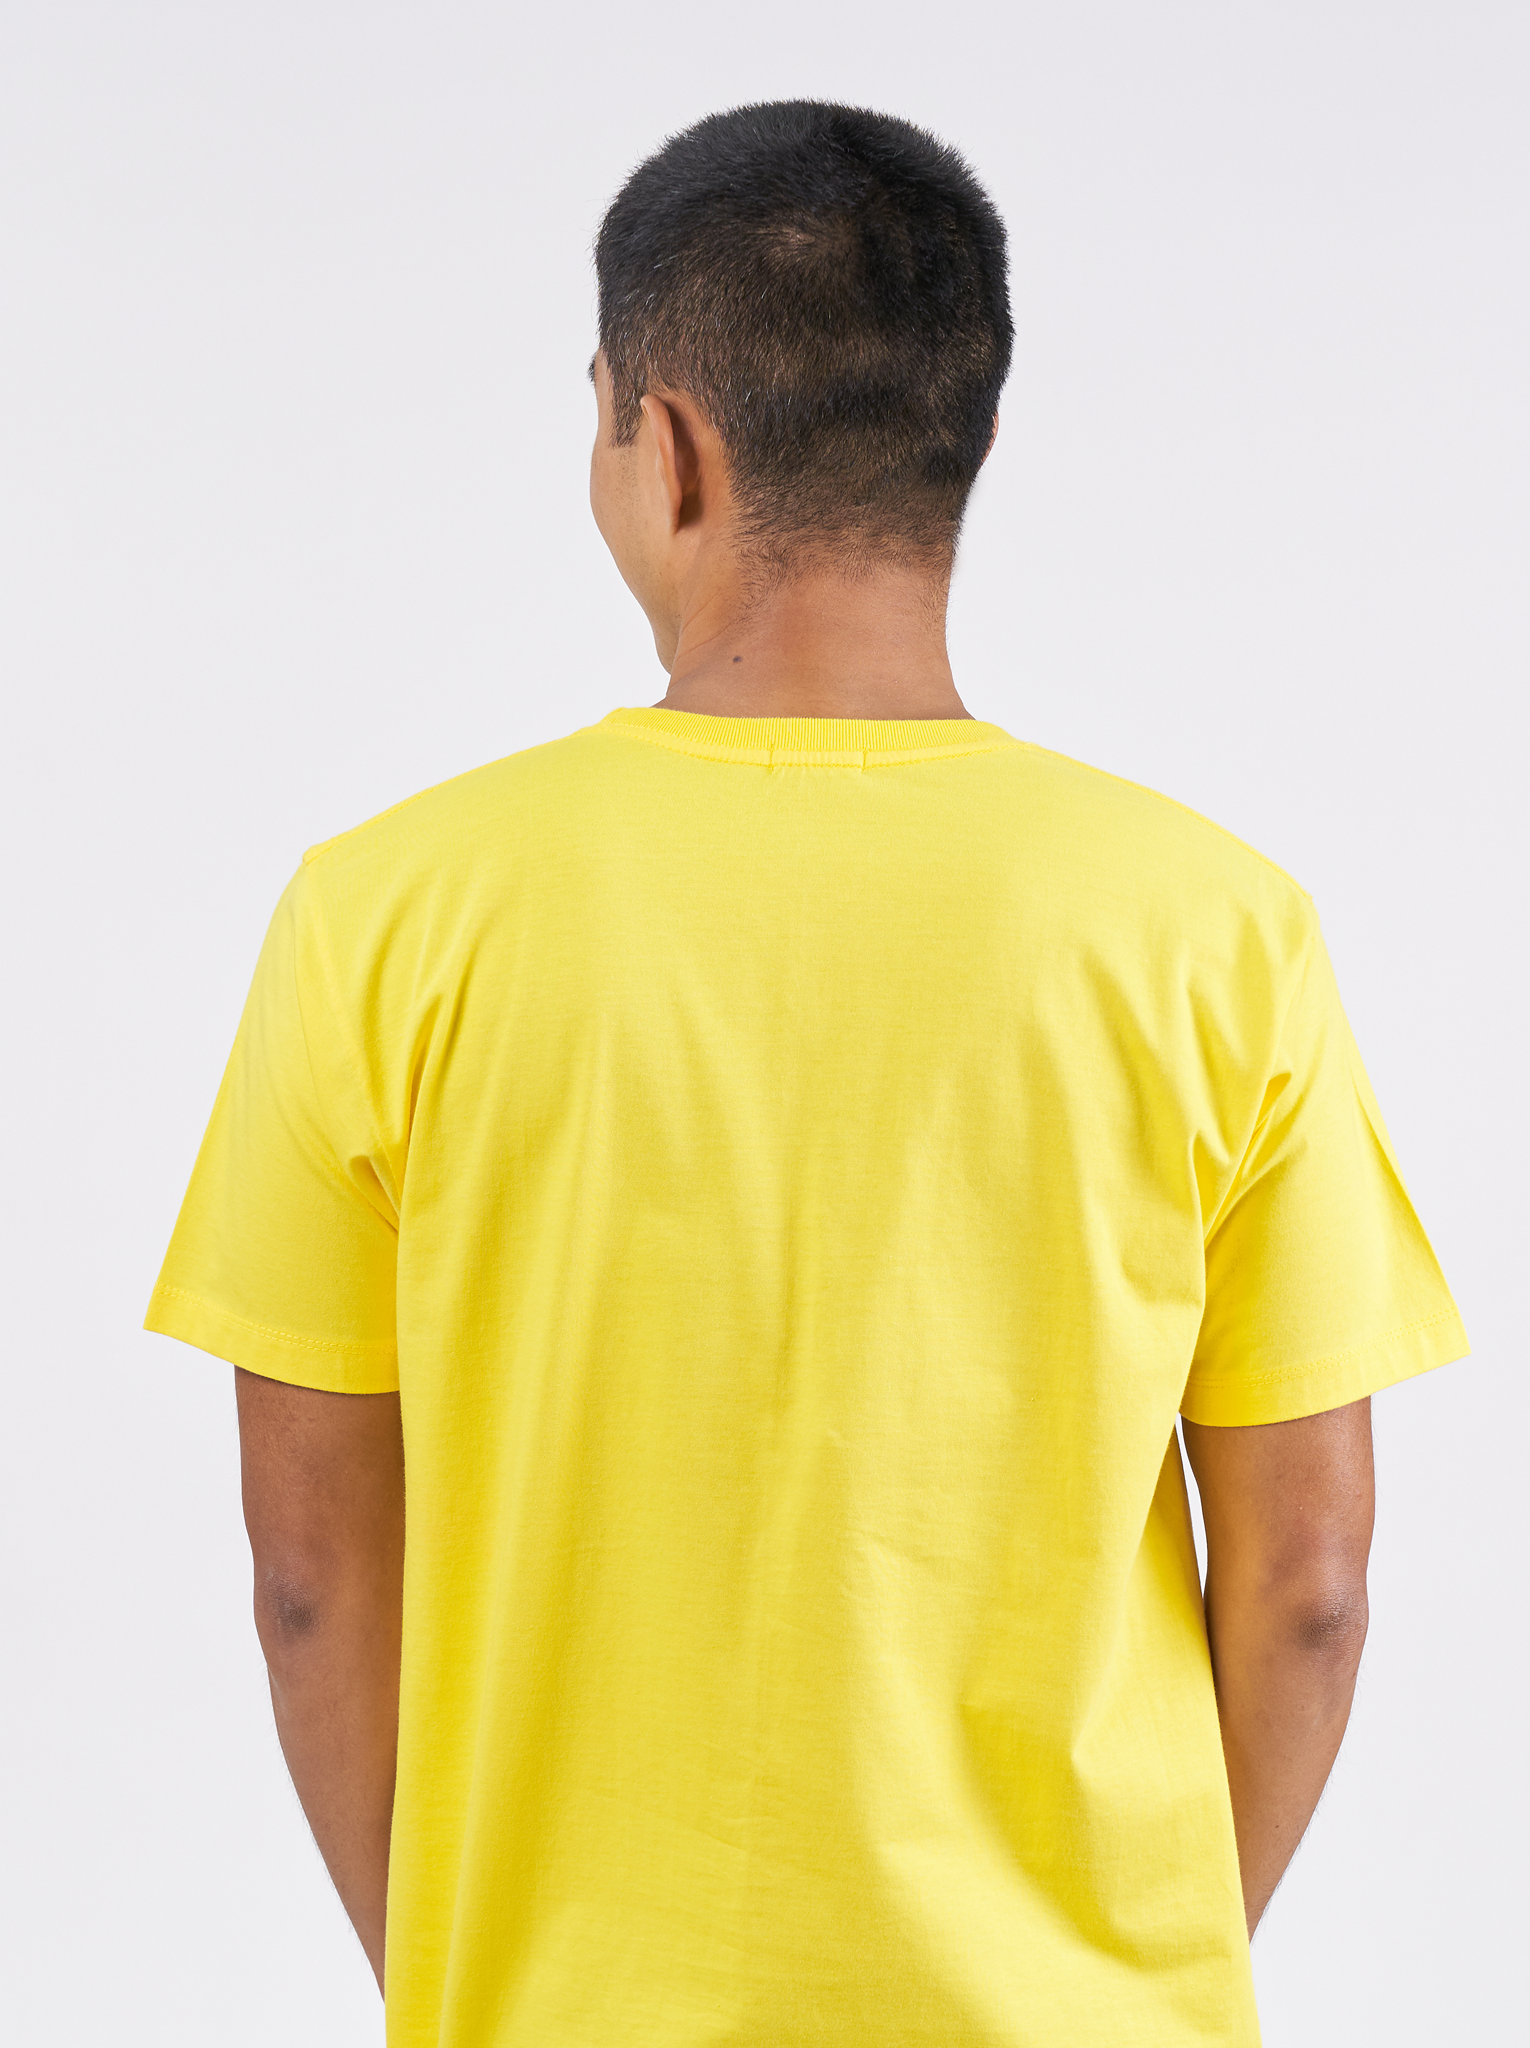 T-Shirt เสื้อยืด (Yellow, สีเหลือง)(Unisex)